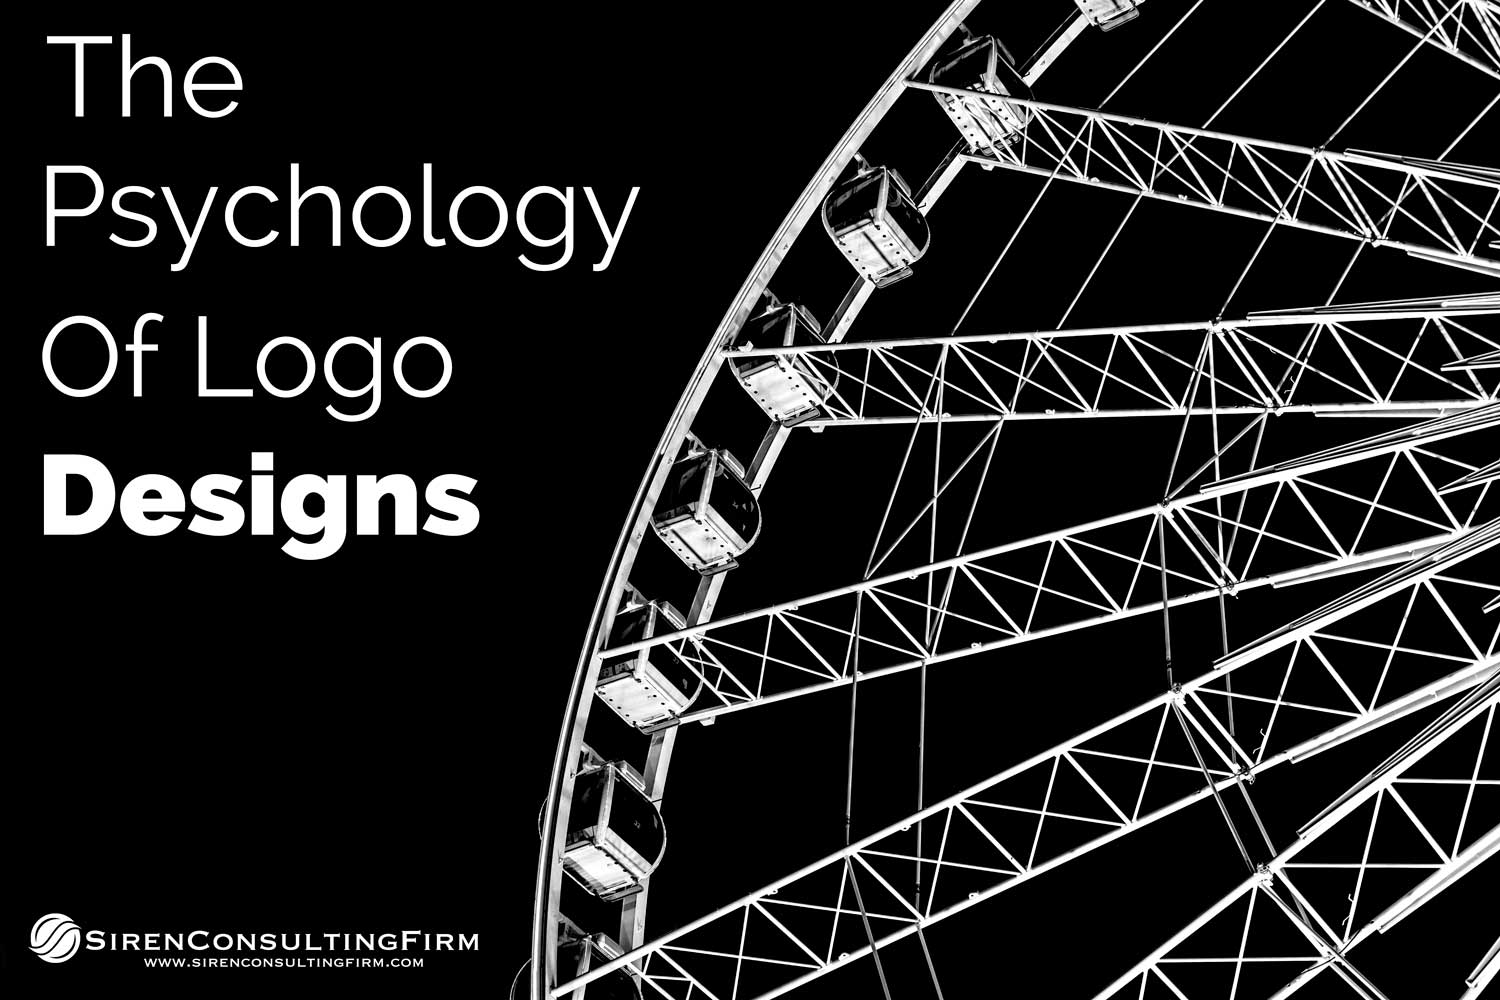 The Psychology of Logo Designs